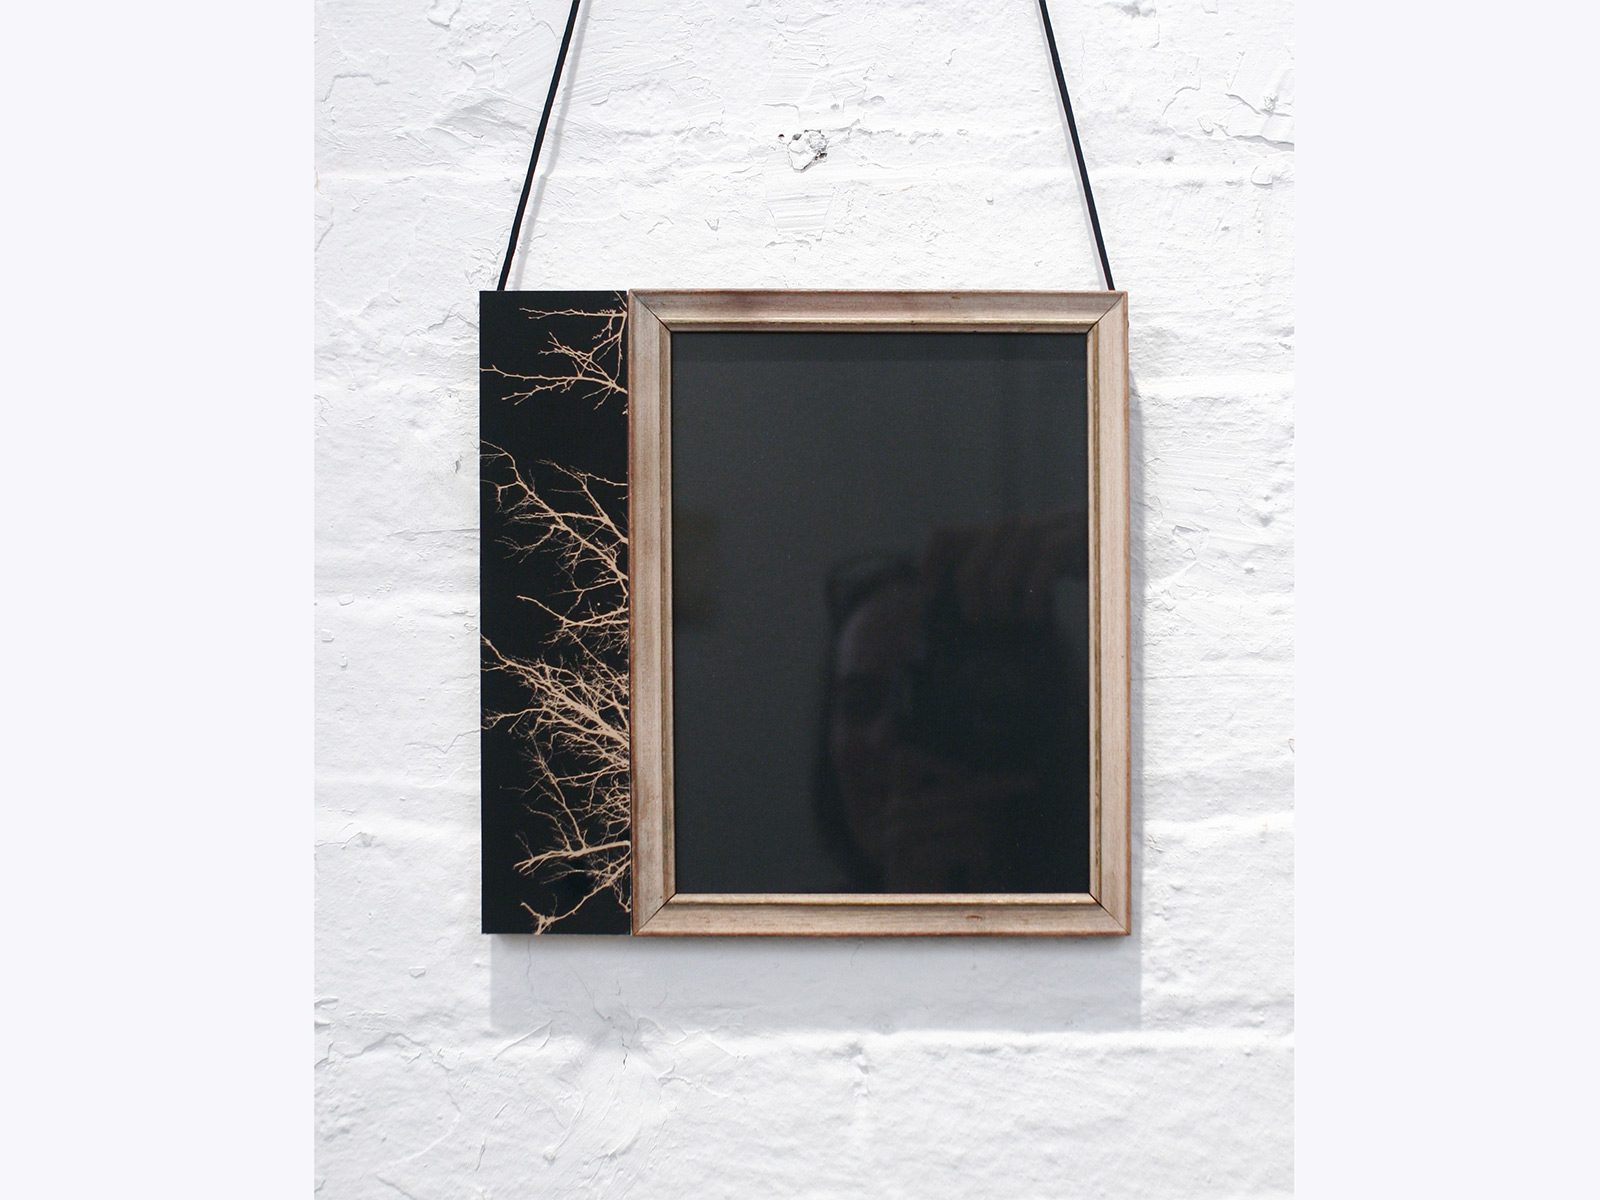 Premonition. Flashe, gouache, archival pigment print, frame, wood, ribbon. 2014.